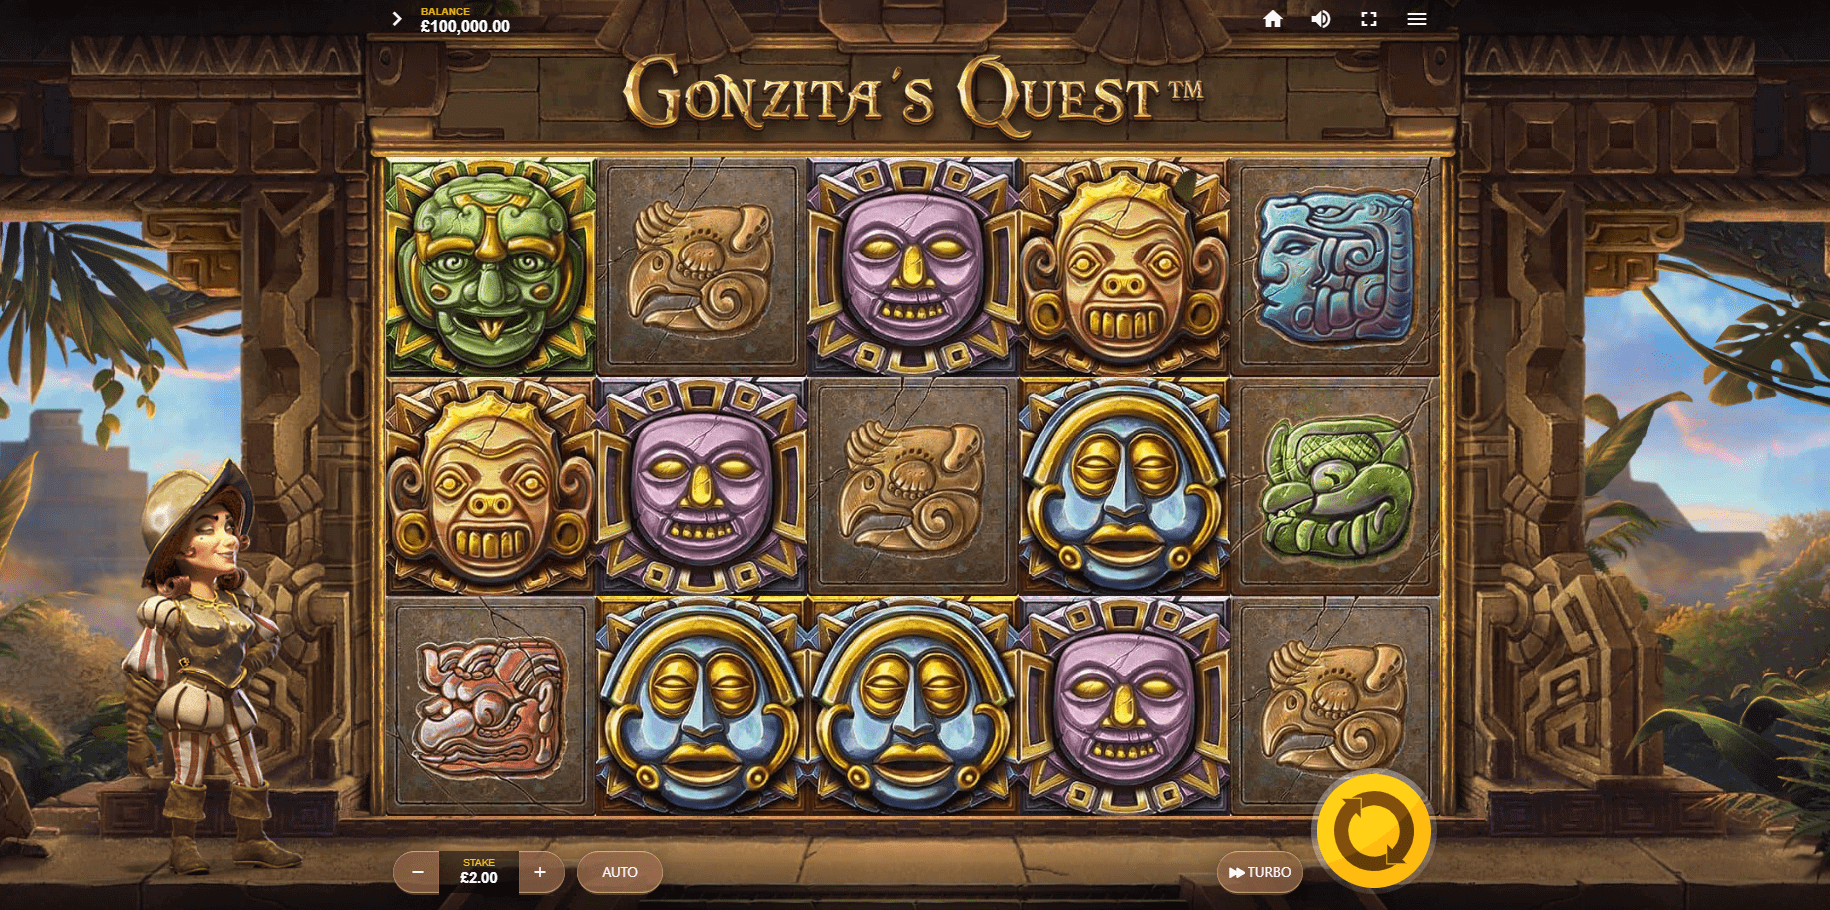 Gonzita's Quest slot